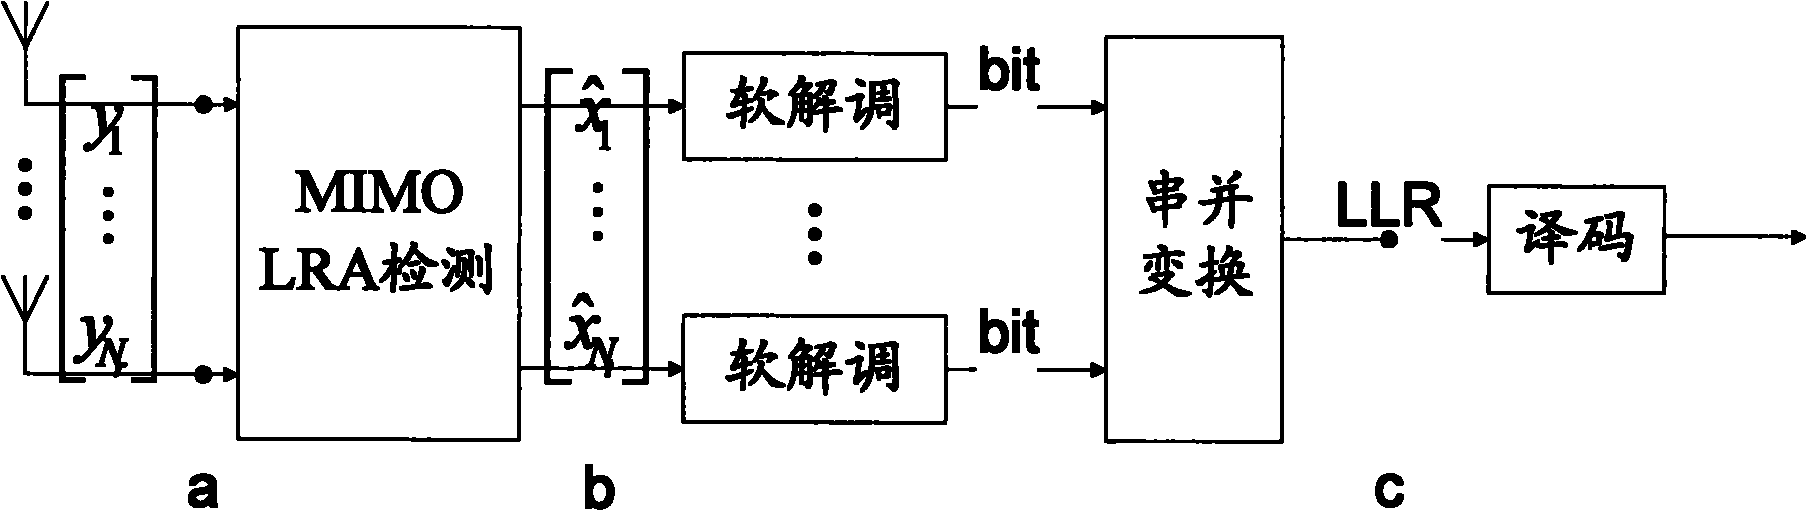 Lattice reduction based retransmission merging method for MIMO (Multiple Input Multiple Output) system